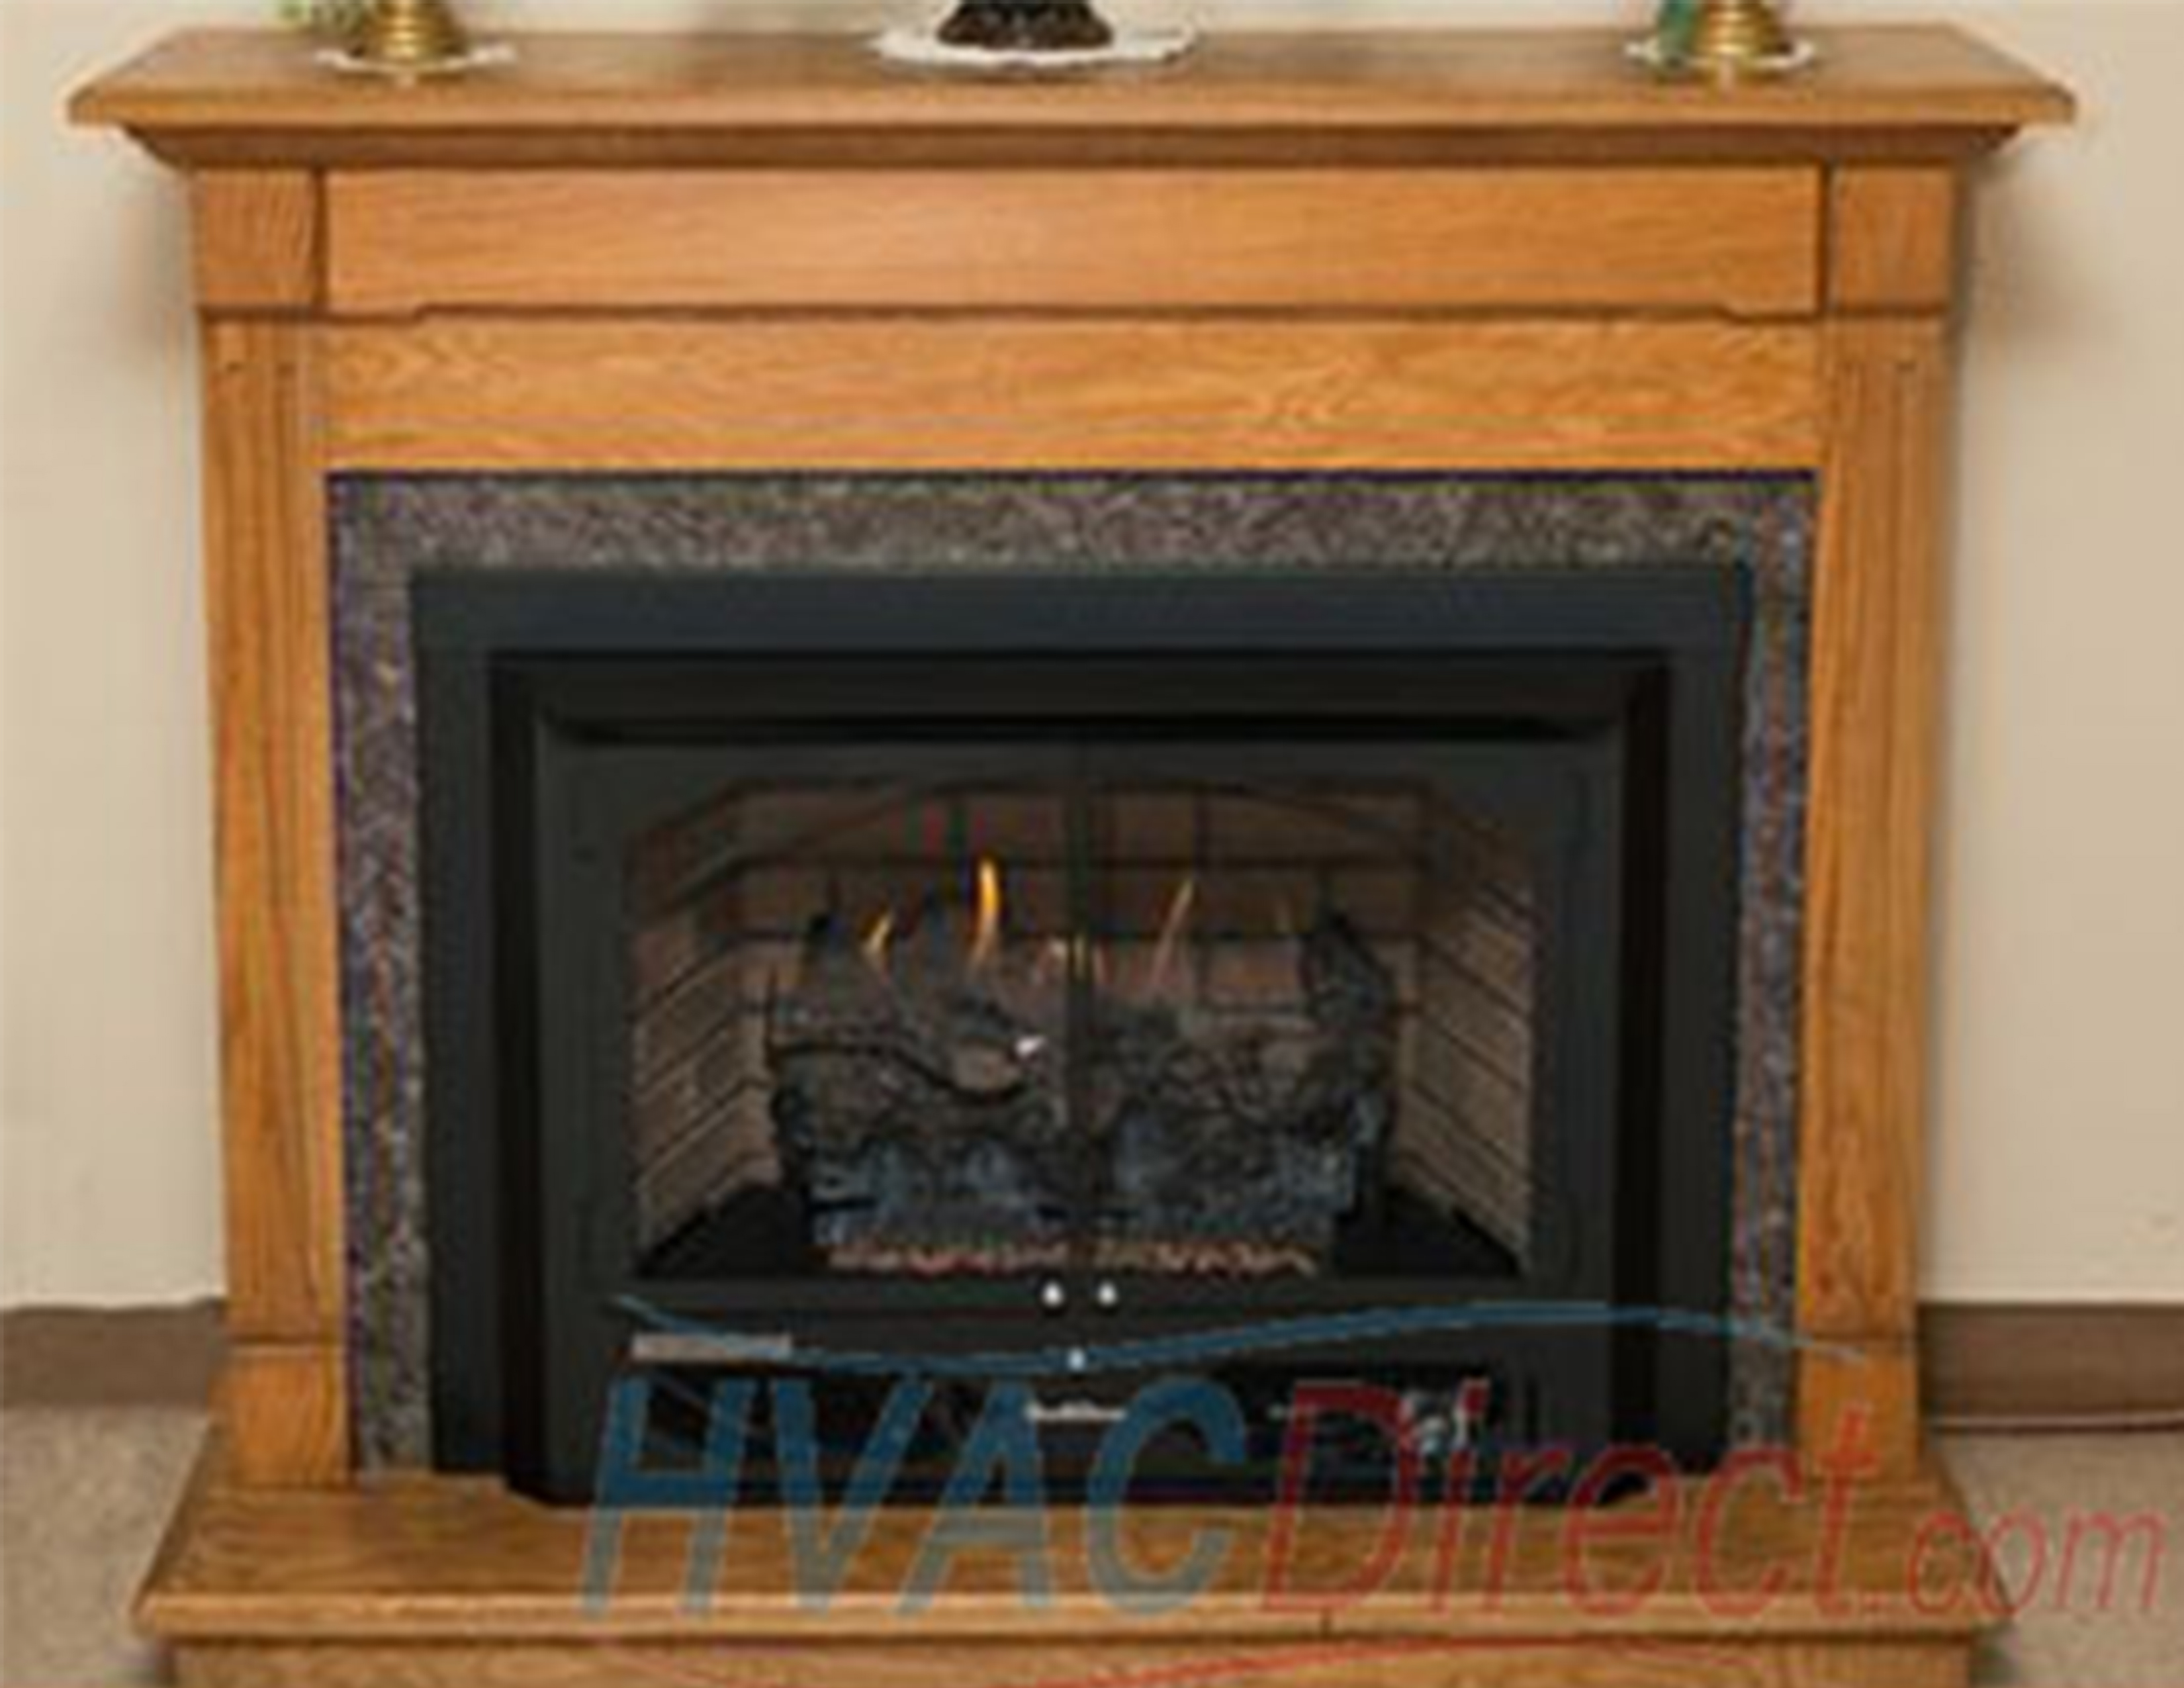 Vent Free Wall Mount Gas Fireplace Luxury Buck Stove Model 34zc Vent Free Gas Fireplace